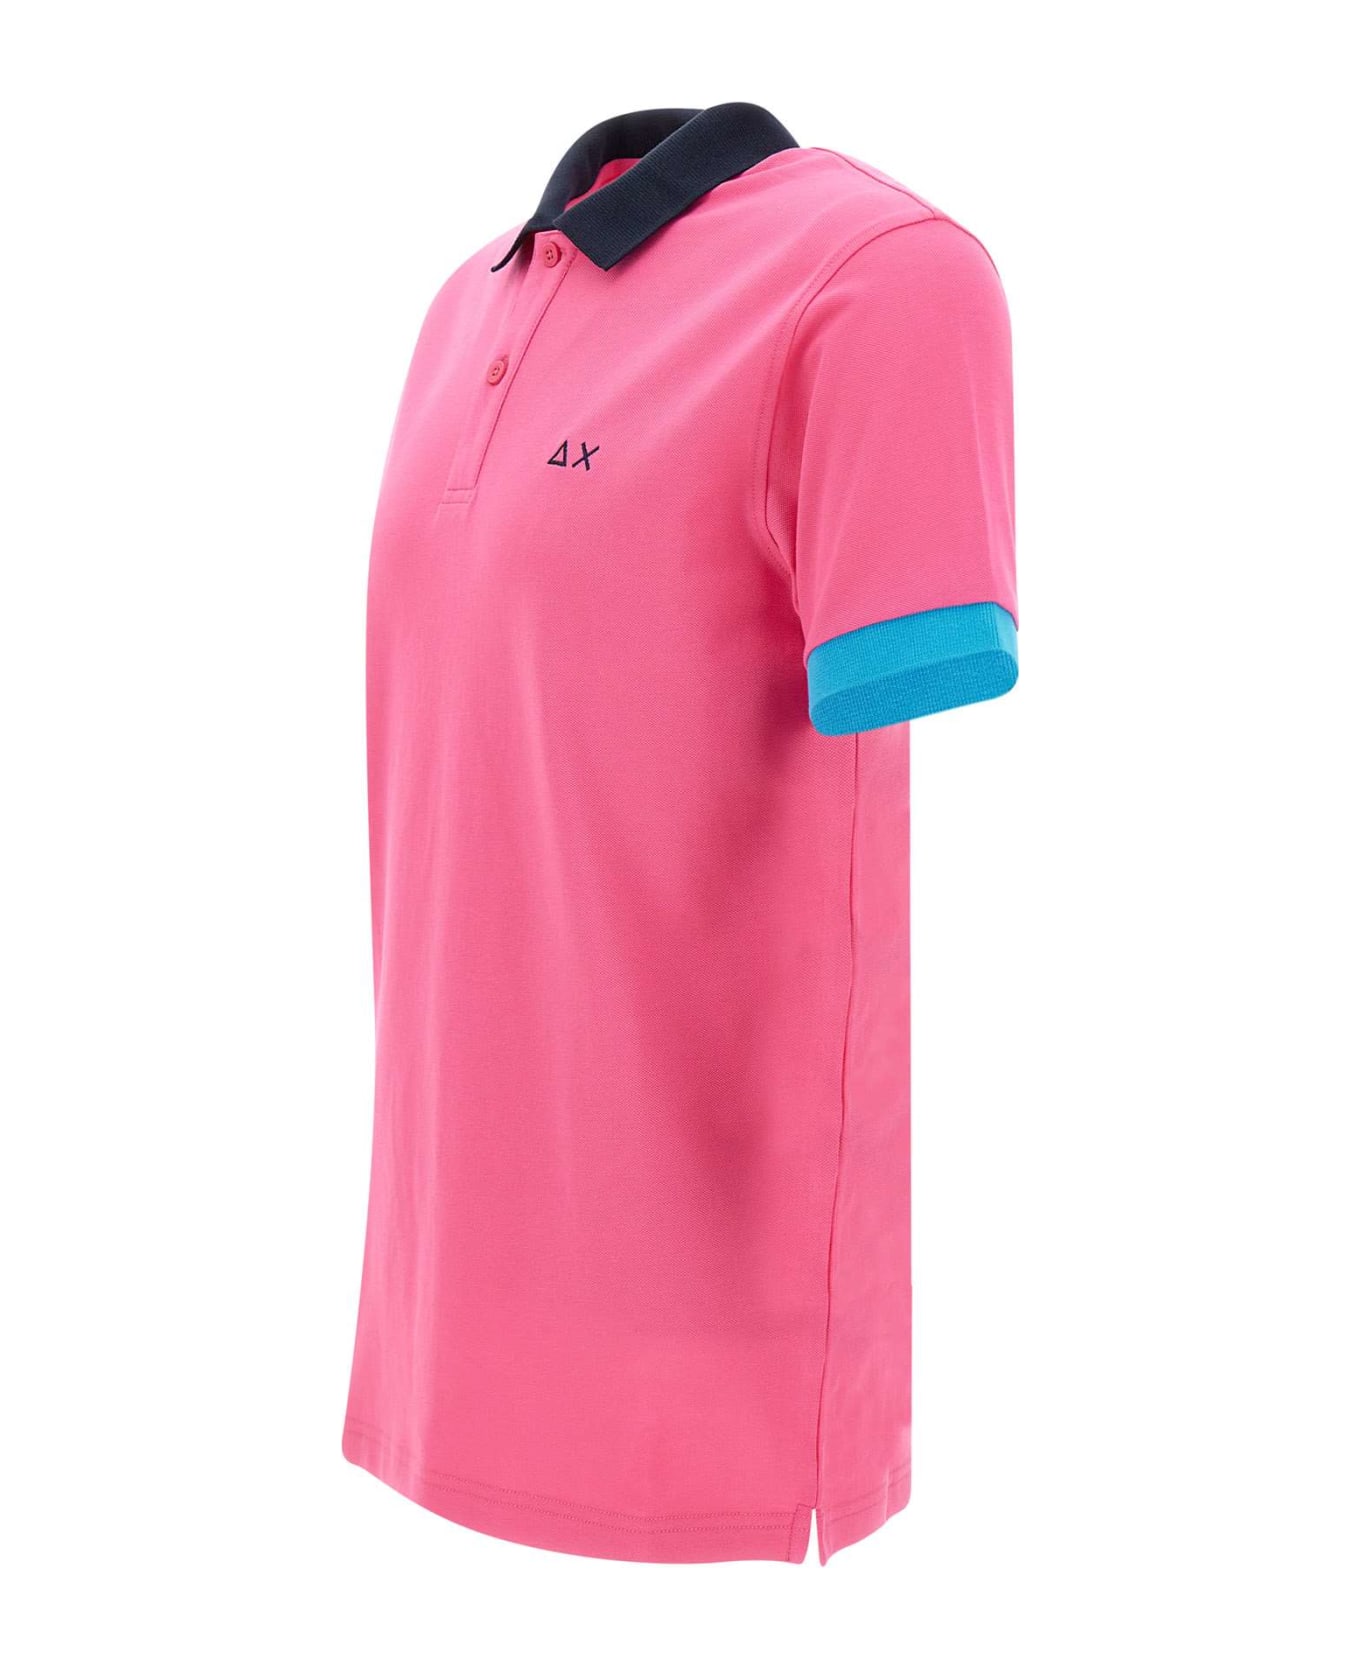 Sun 68 "3-colors" Cotton Polo Shirt - FUCHSIA ポロシャツ